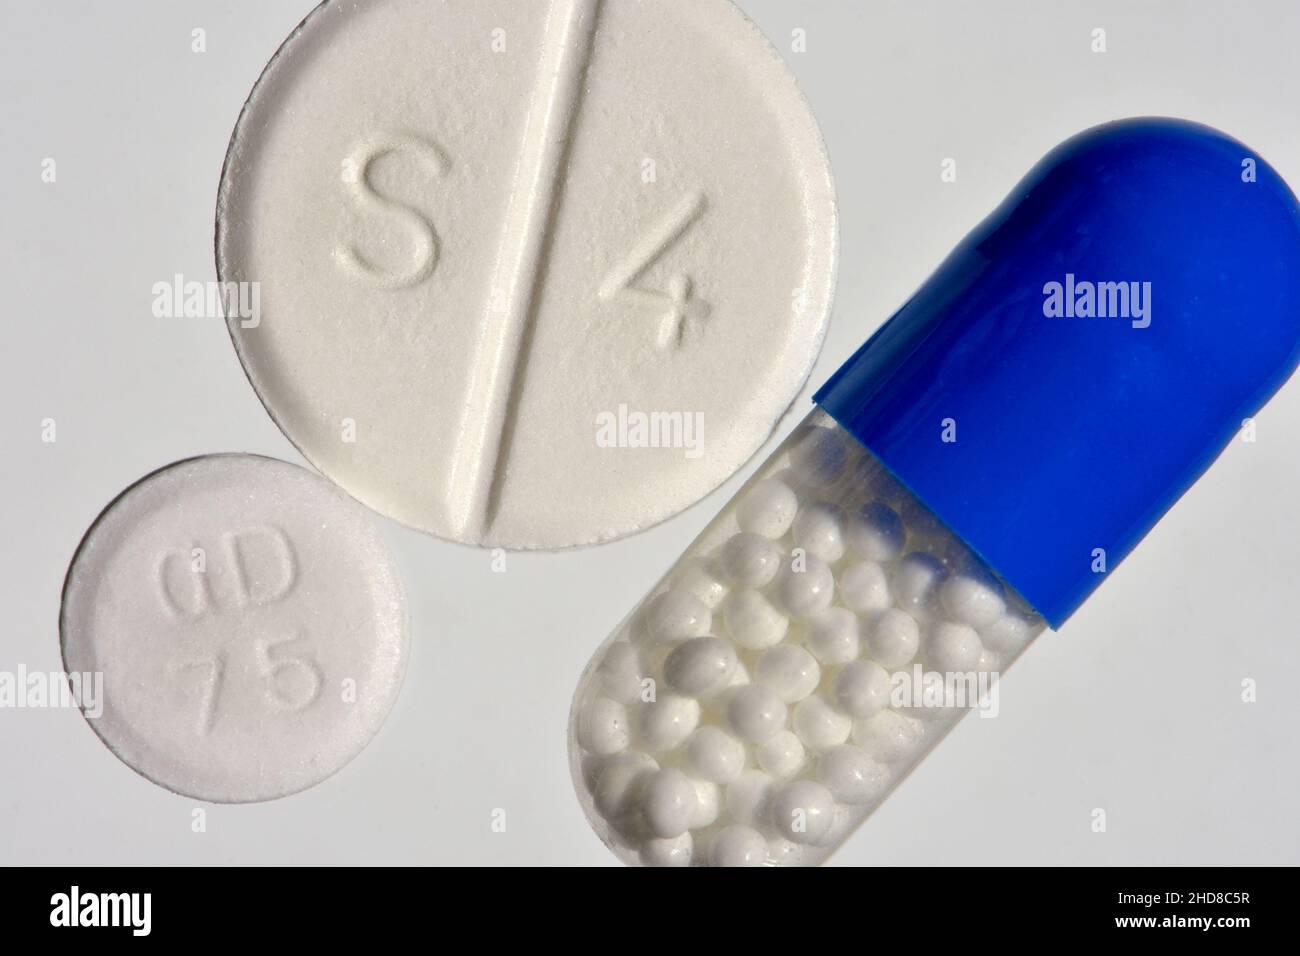 Schmerzmittel: Ibuprofen-Kapsel, Co-Codamol-Tablette (S4) und dispersible Aspirin (OD 75) Stockfoto